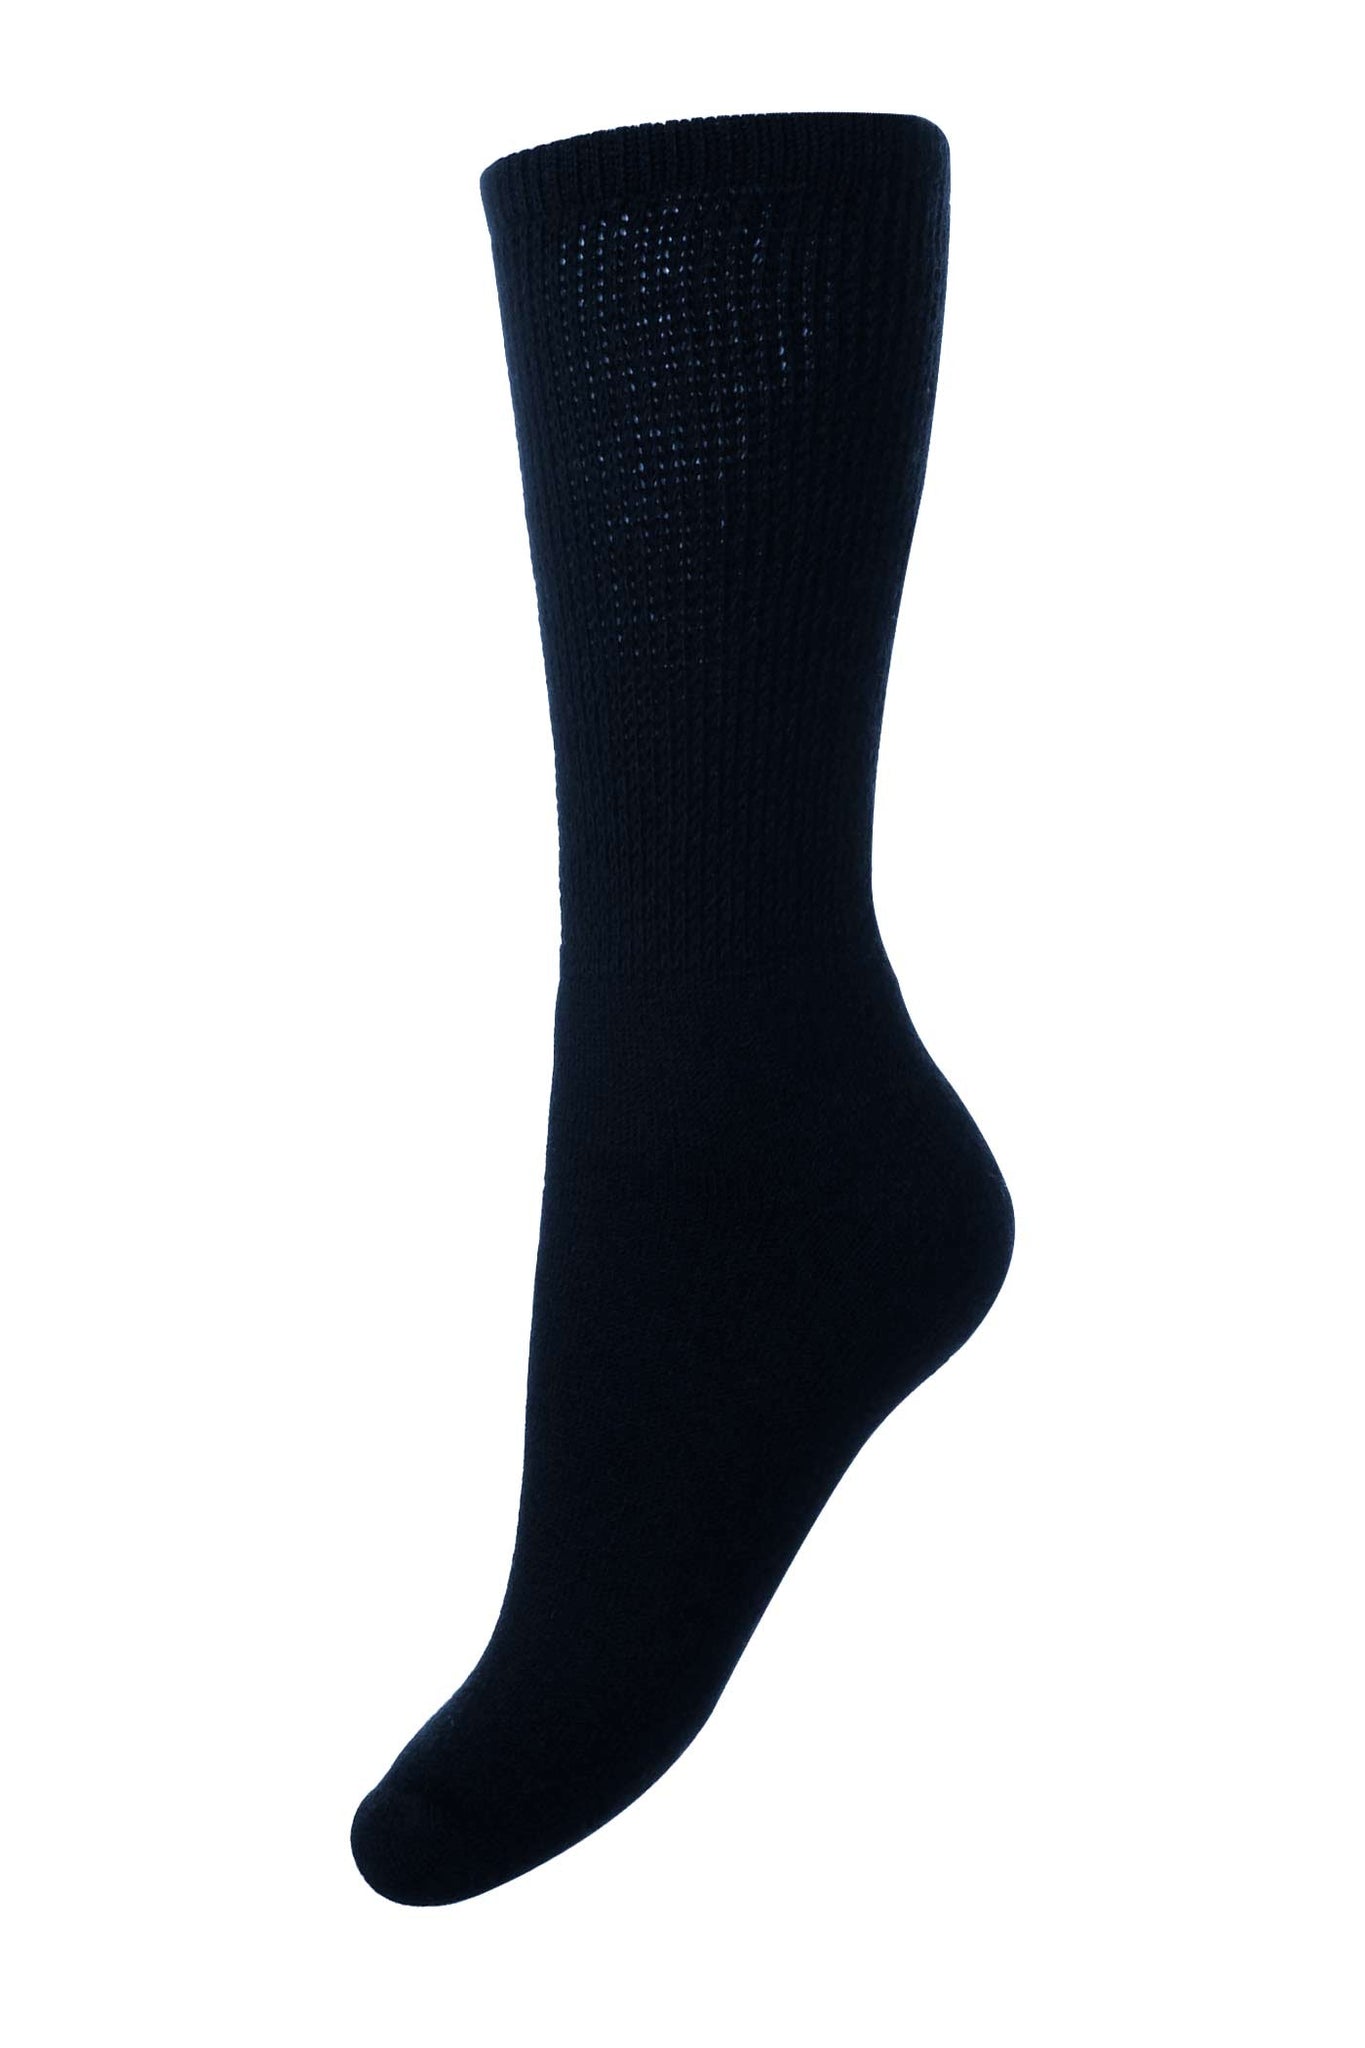 Ladies Diabetic Sock - Cotton - HJ1351